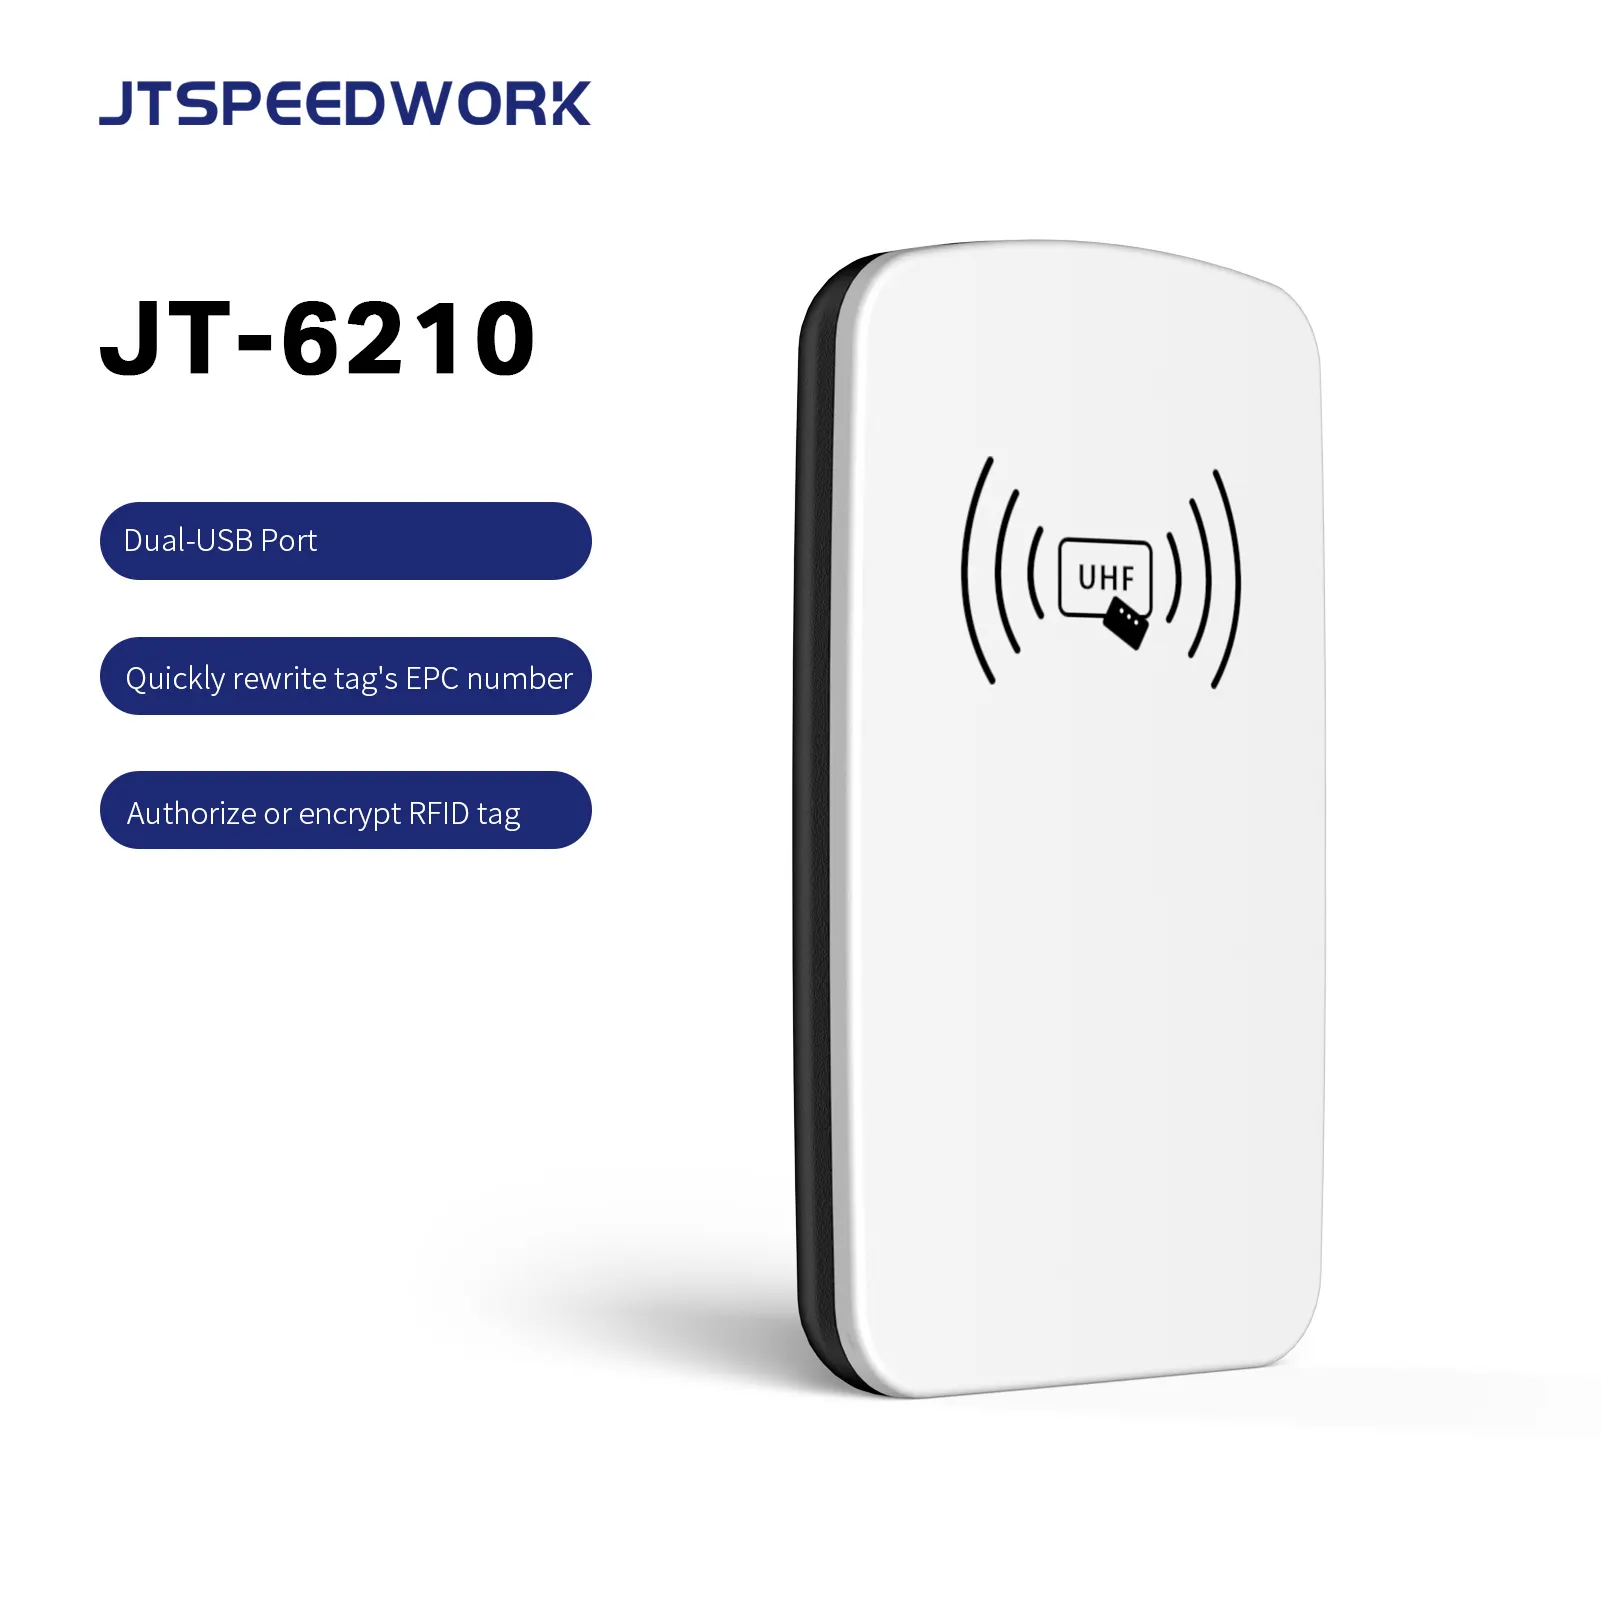 JTSPEEDWORK JT-6210 USBデスクトップパッシブタグUHFRFIDリーダー (SDKデモ付き)